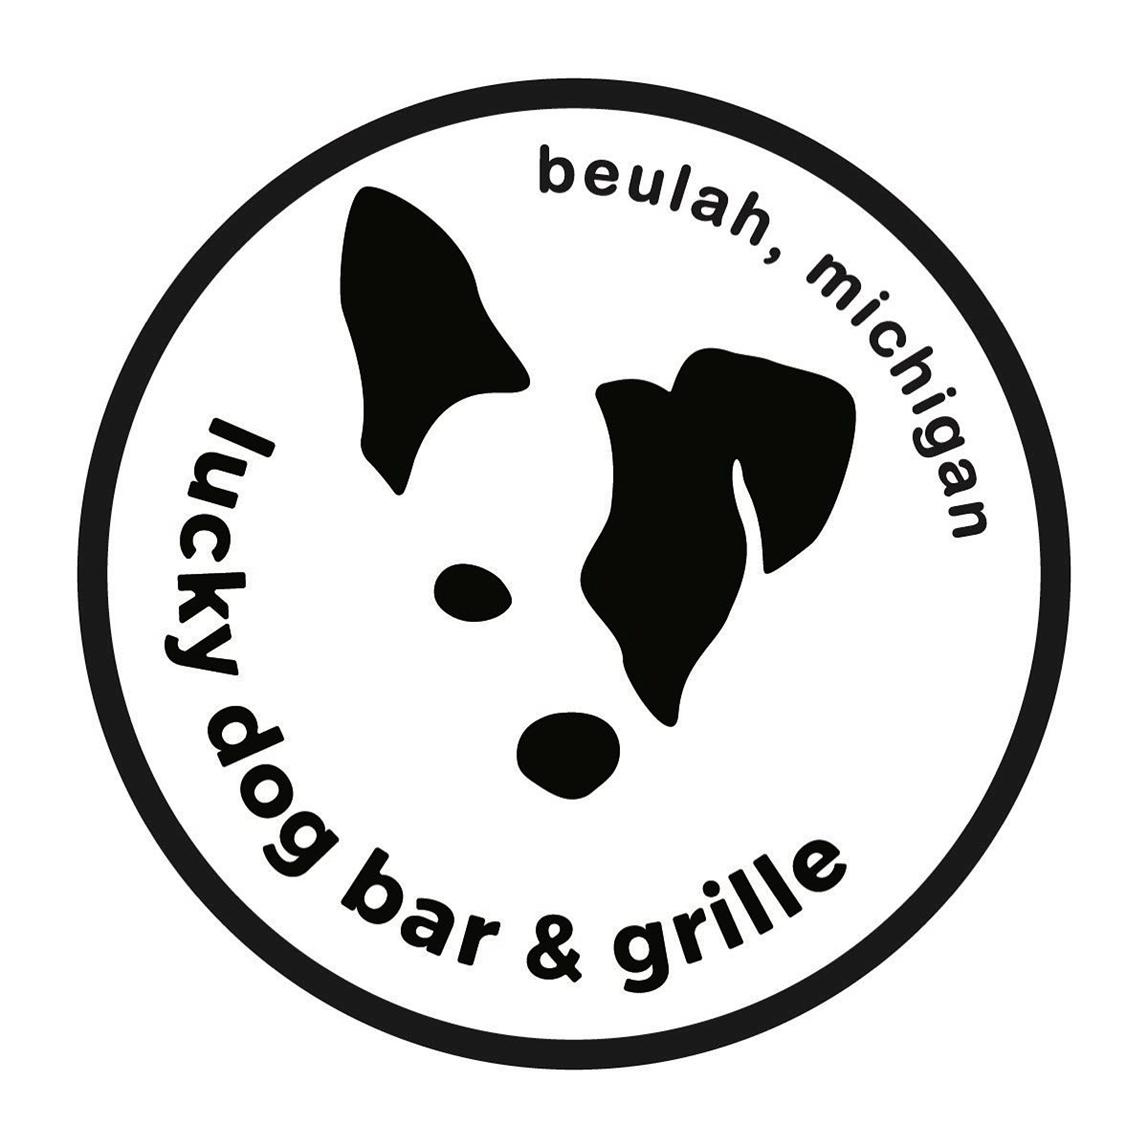 Lucky Dog Bar & Grille